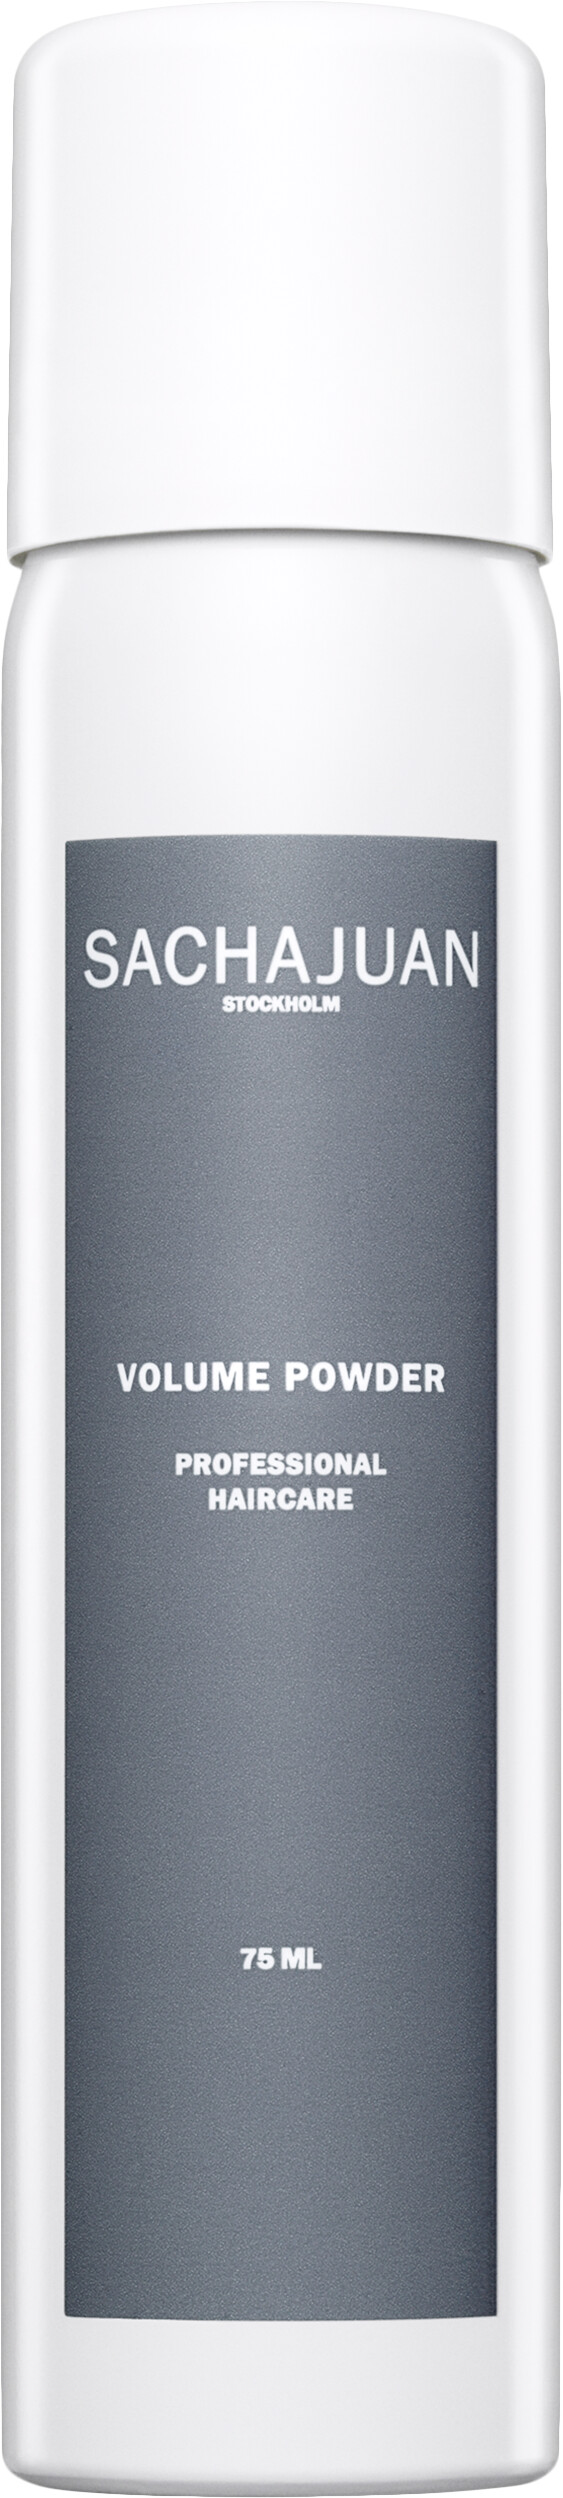 Sachajuan Volume Powder 75ml